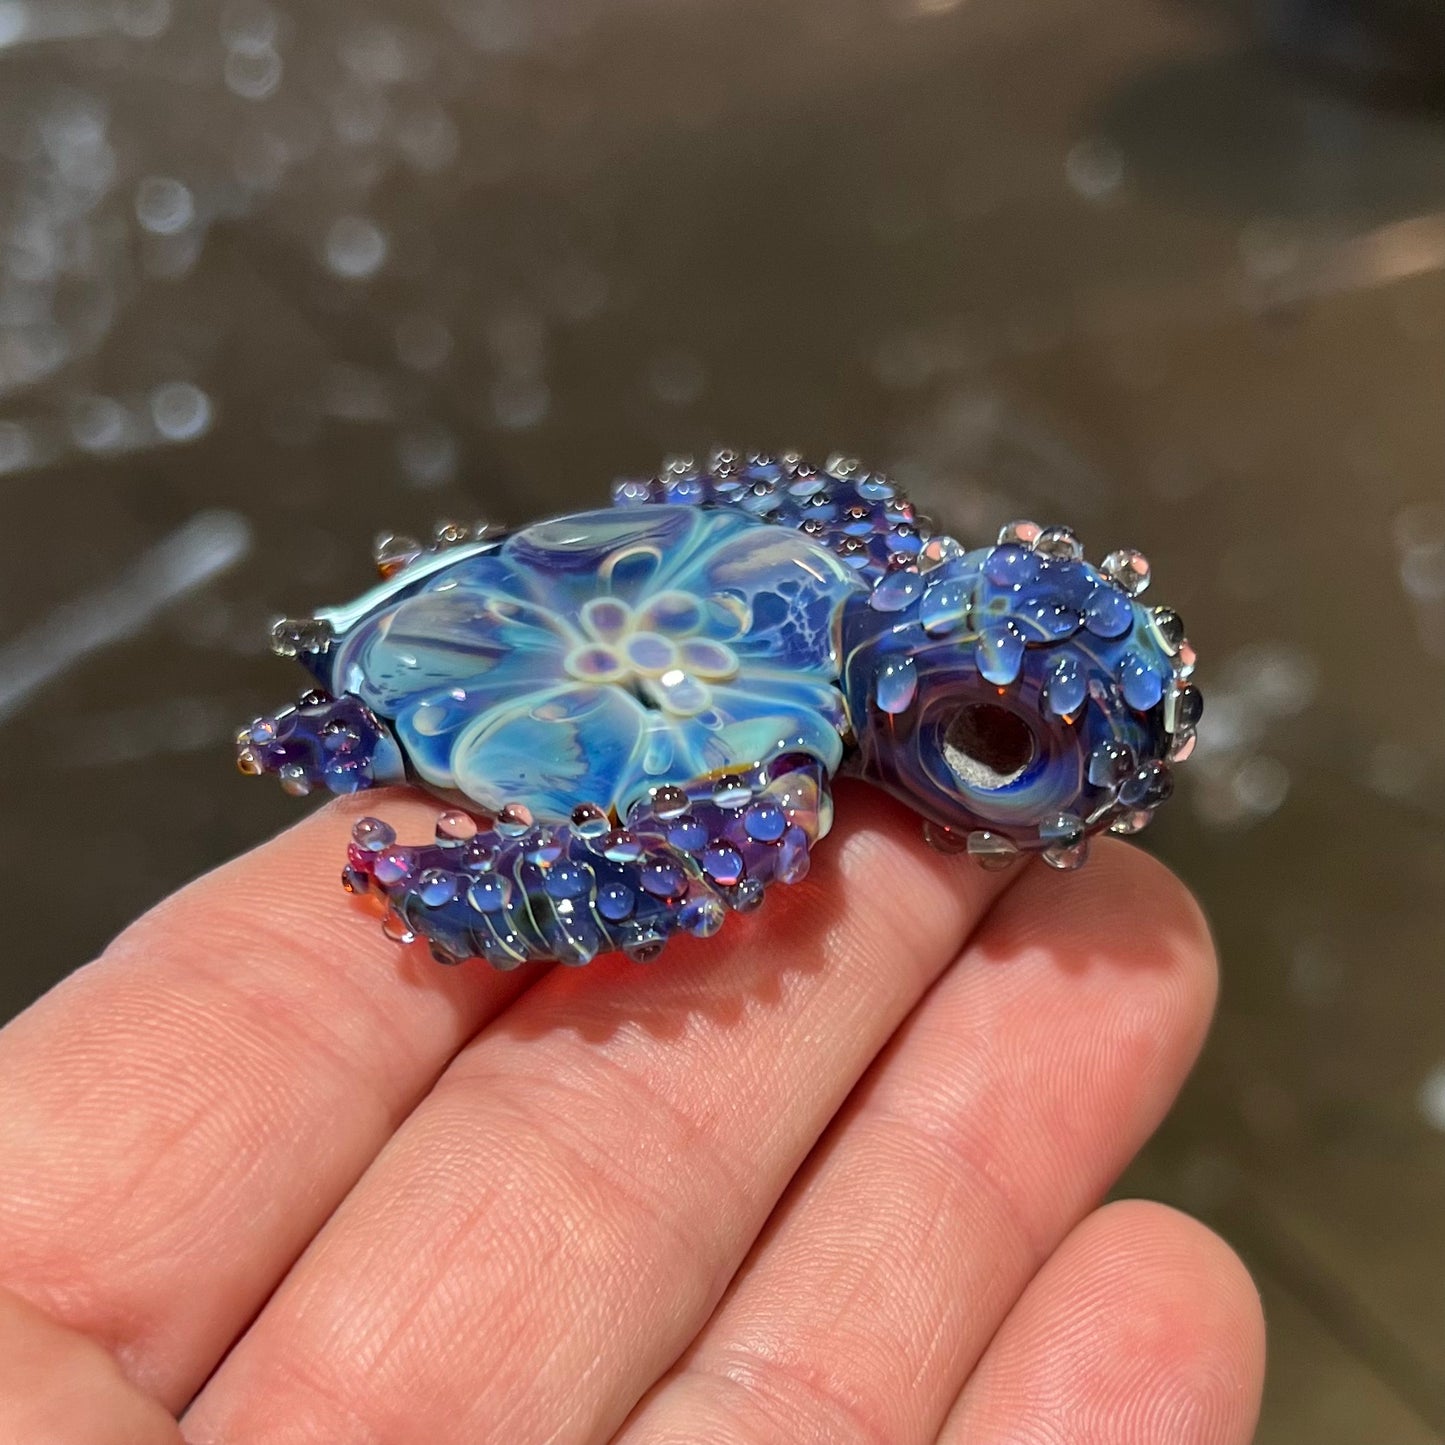 Flower Shell Sea Turtle Pendant